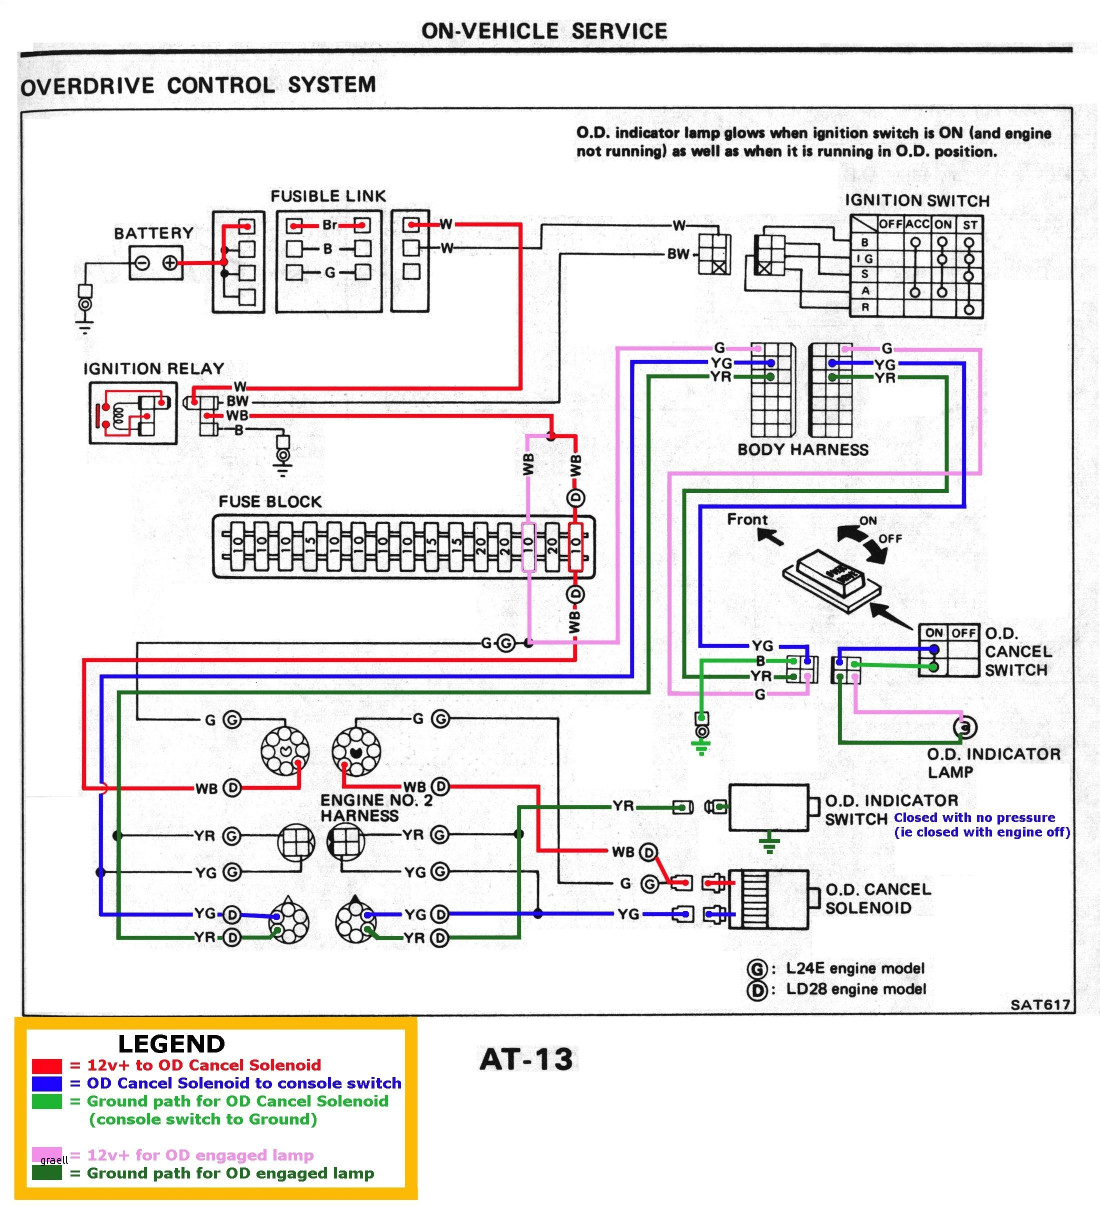 mark 10 ballast wiring diagram wiring diagrams konsult advance fluorescent ballast wiring diagram